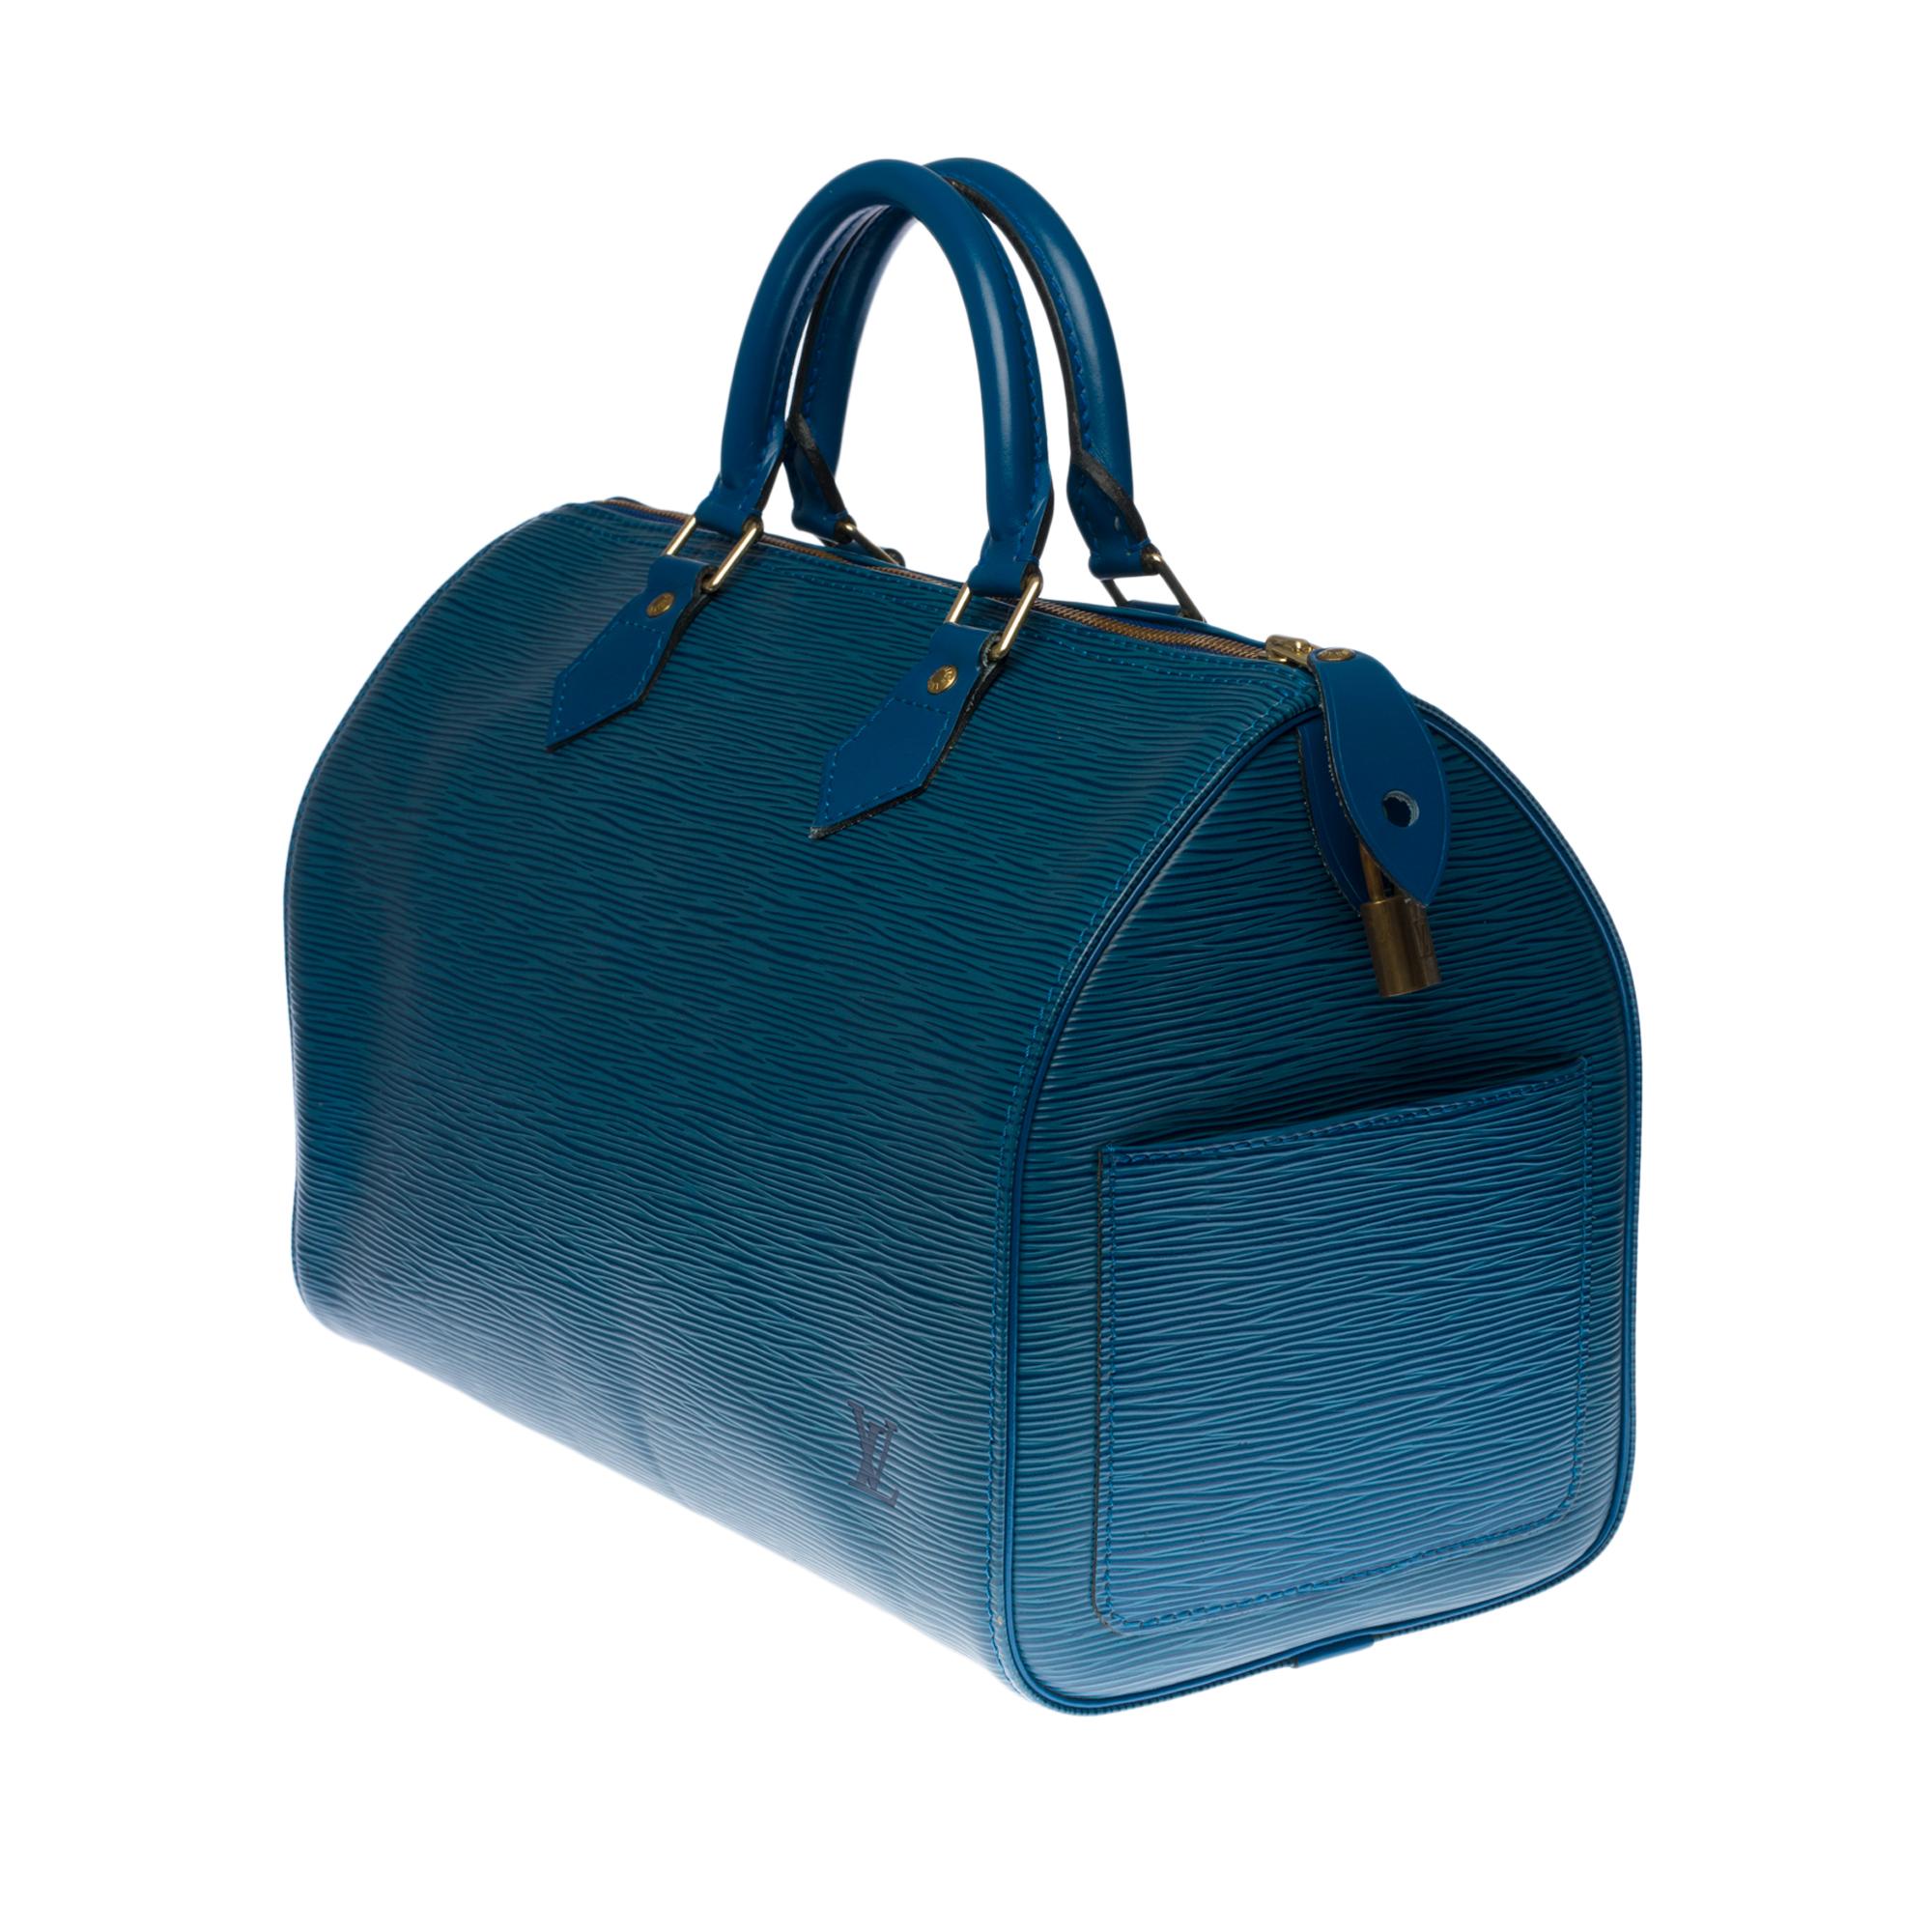 Blue Louis Vuitton Speedy 30 handbag in blue épi leather and gold hardware